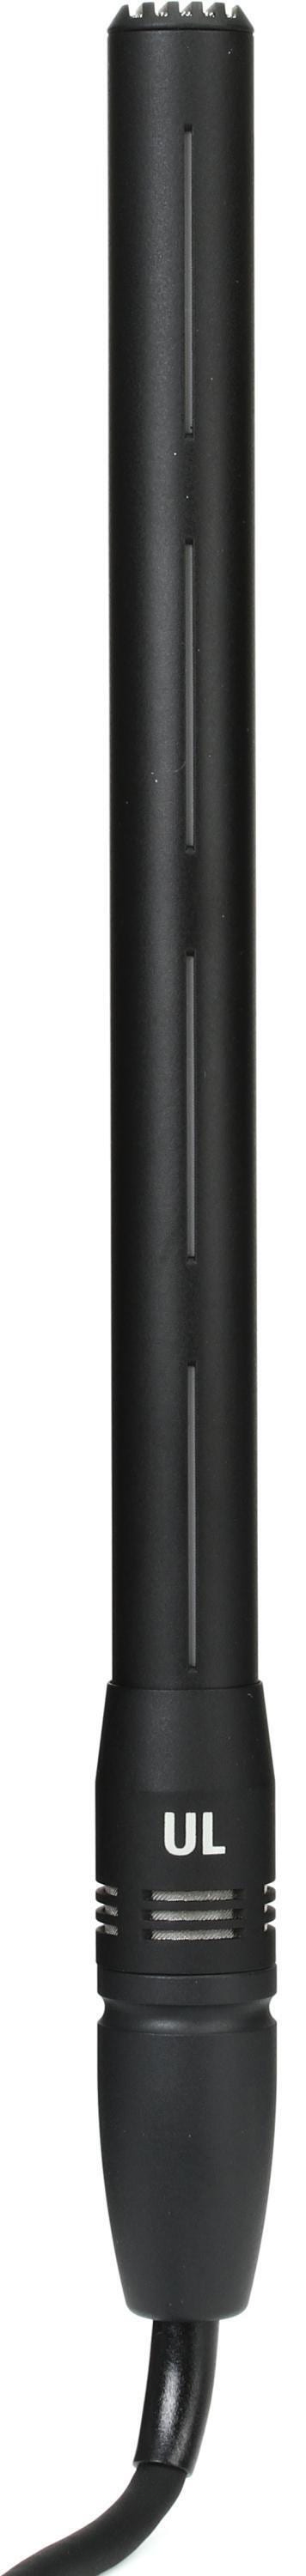 Audio-Technica U853PM Cardioid Condenser Hanging Microphone | Sweetwater